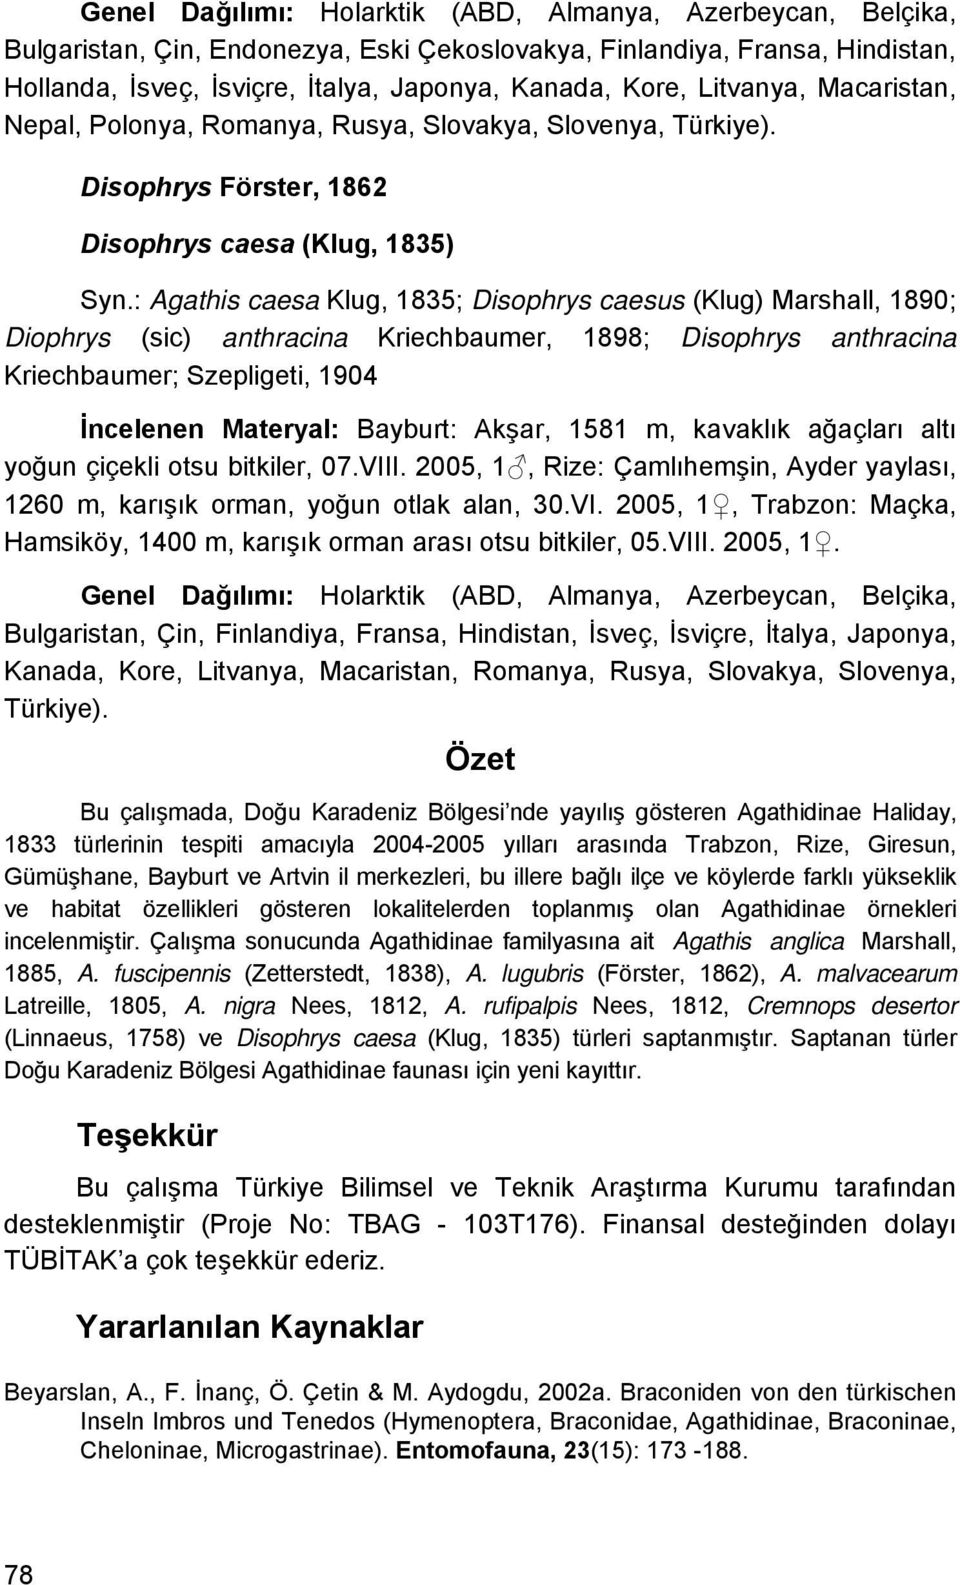 : Agathis caesa Klug, 1835; Disophrys caesus (Klug) Marshall, 1890; Diophrys (sic) anthracina Kriechbaumer, 1898; Disophrys anthracina Kriechbaumer; Szepligeti, 1904 İncelenen Materyal: Bayburt: